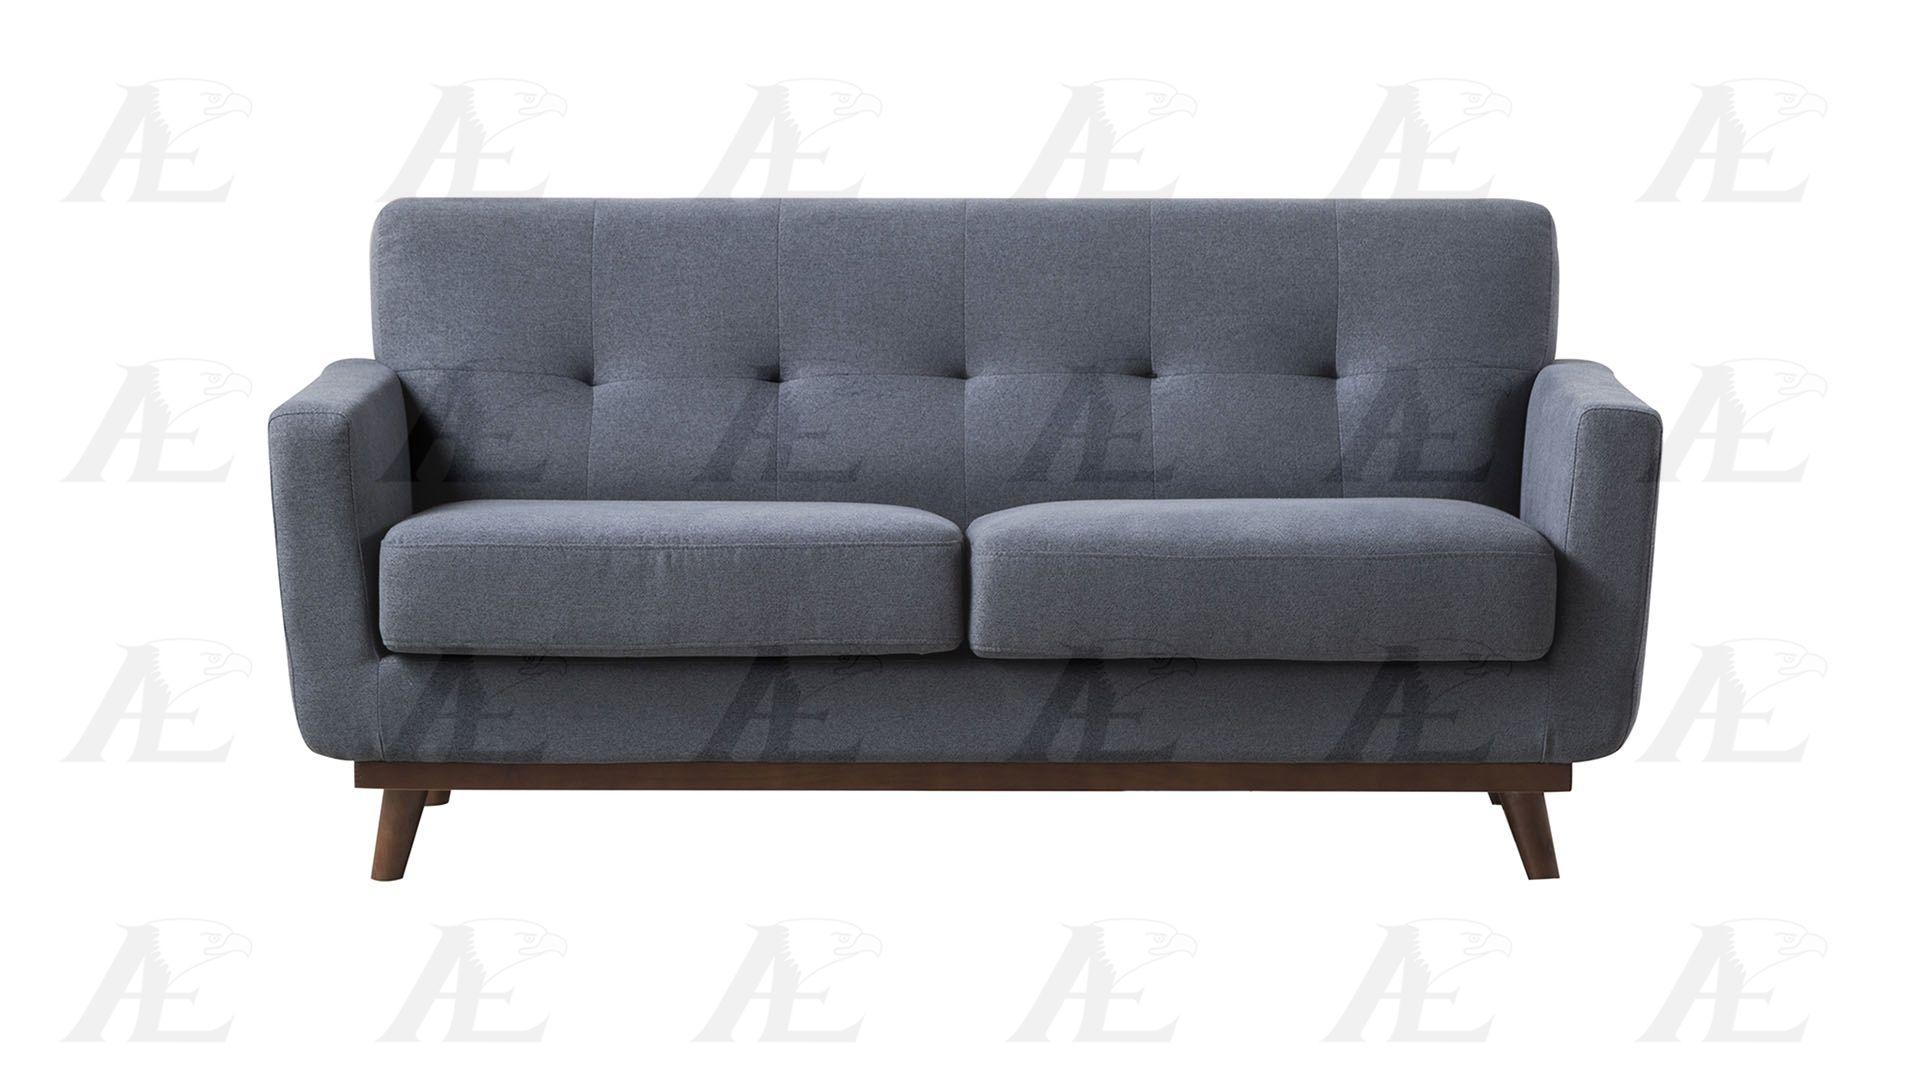 

                    
American Eagle Furniture AE2370 Sofa and Loveseat Set Dark Gray Fabric Purchase 
